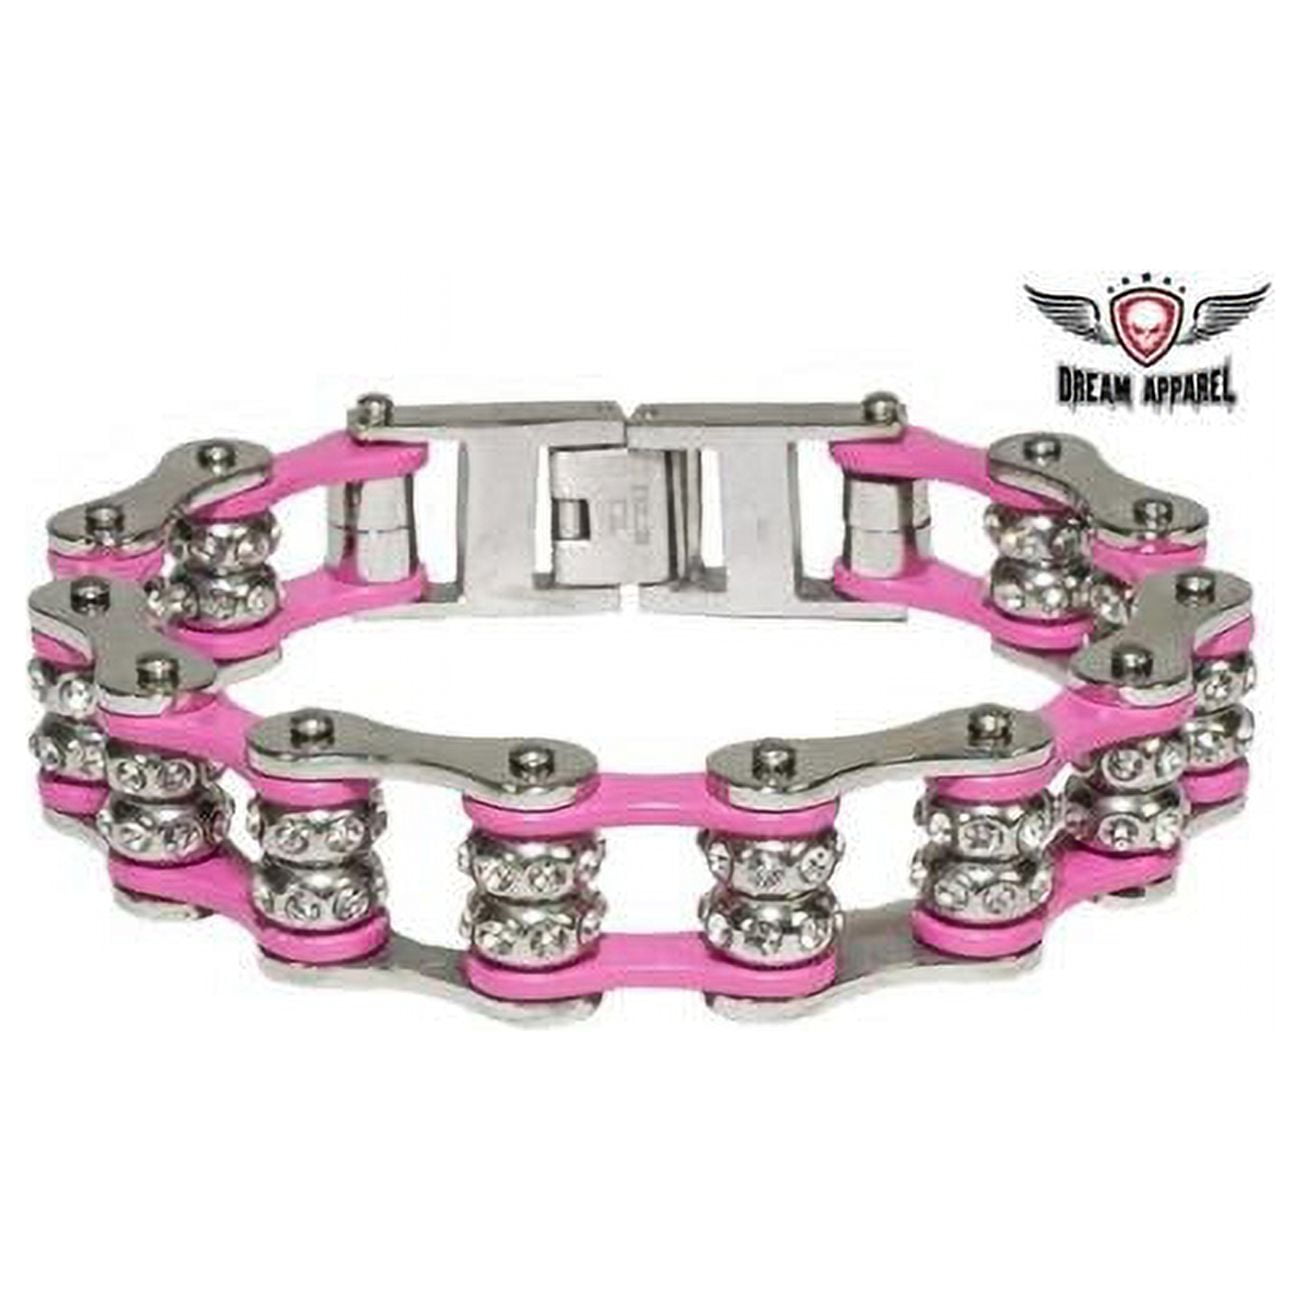 DEALER LEATHER BRD4-L Pink Motorcycle Chain Bracelet with Gemstones - Large